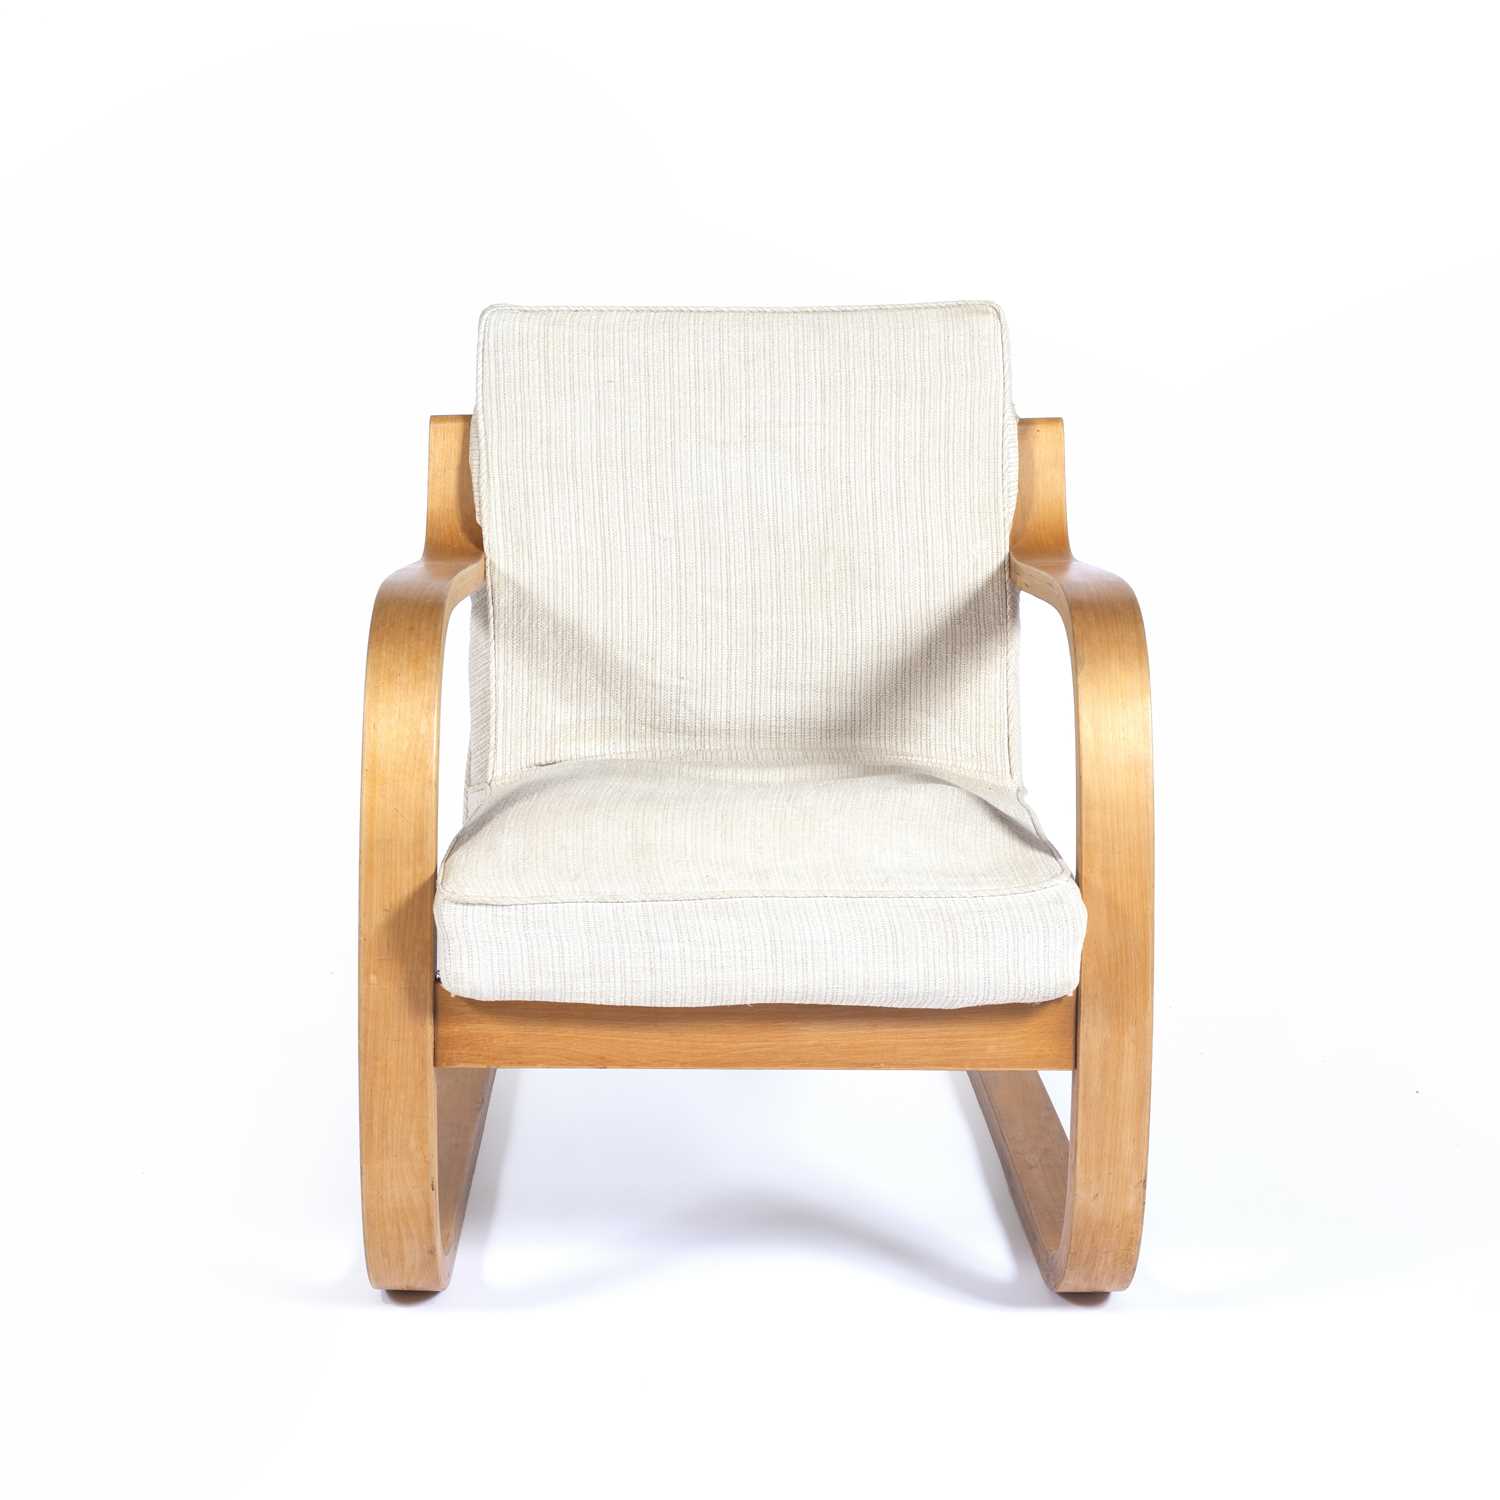 Alvar Aalto (1898-1976) for Finmar Ltd 'Model 402' bentwood birch chair, with the original label